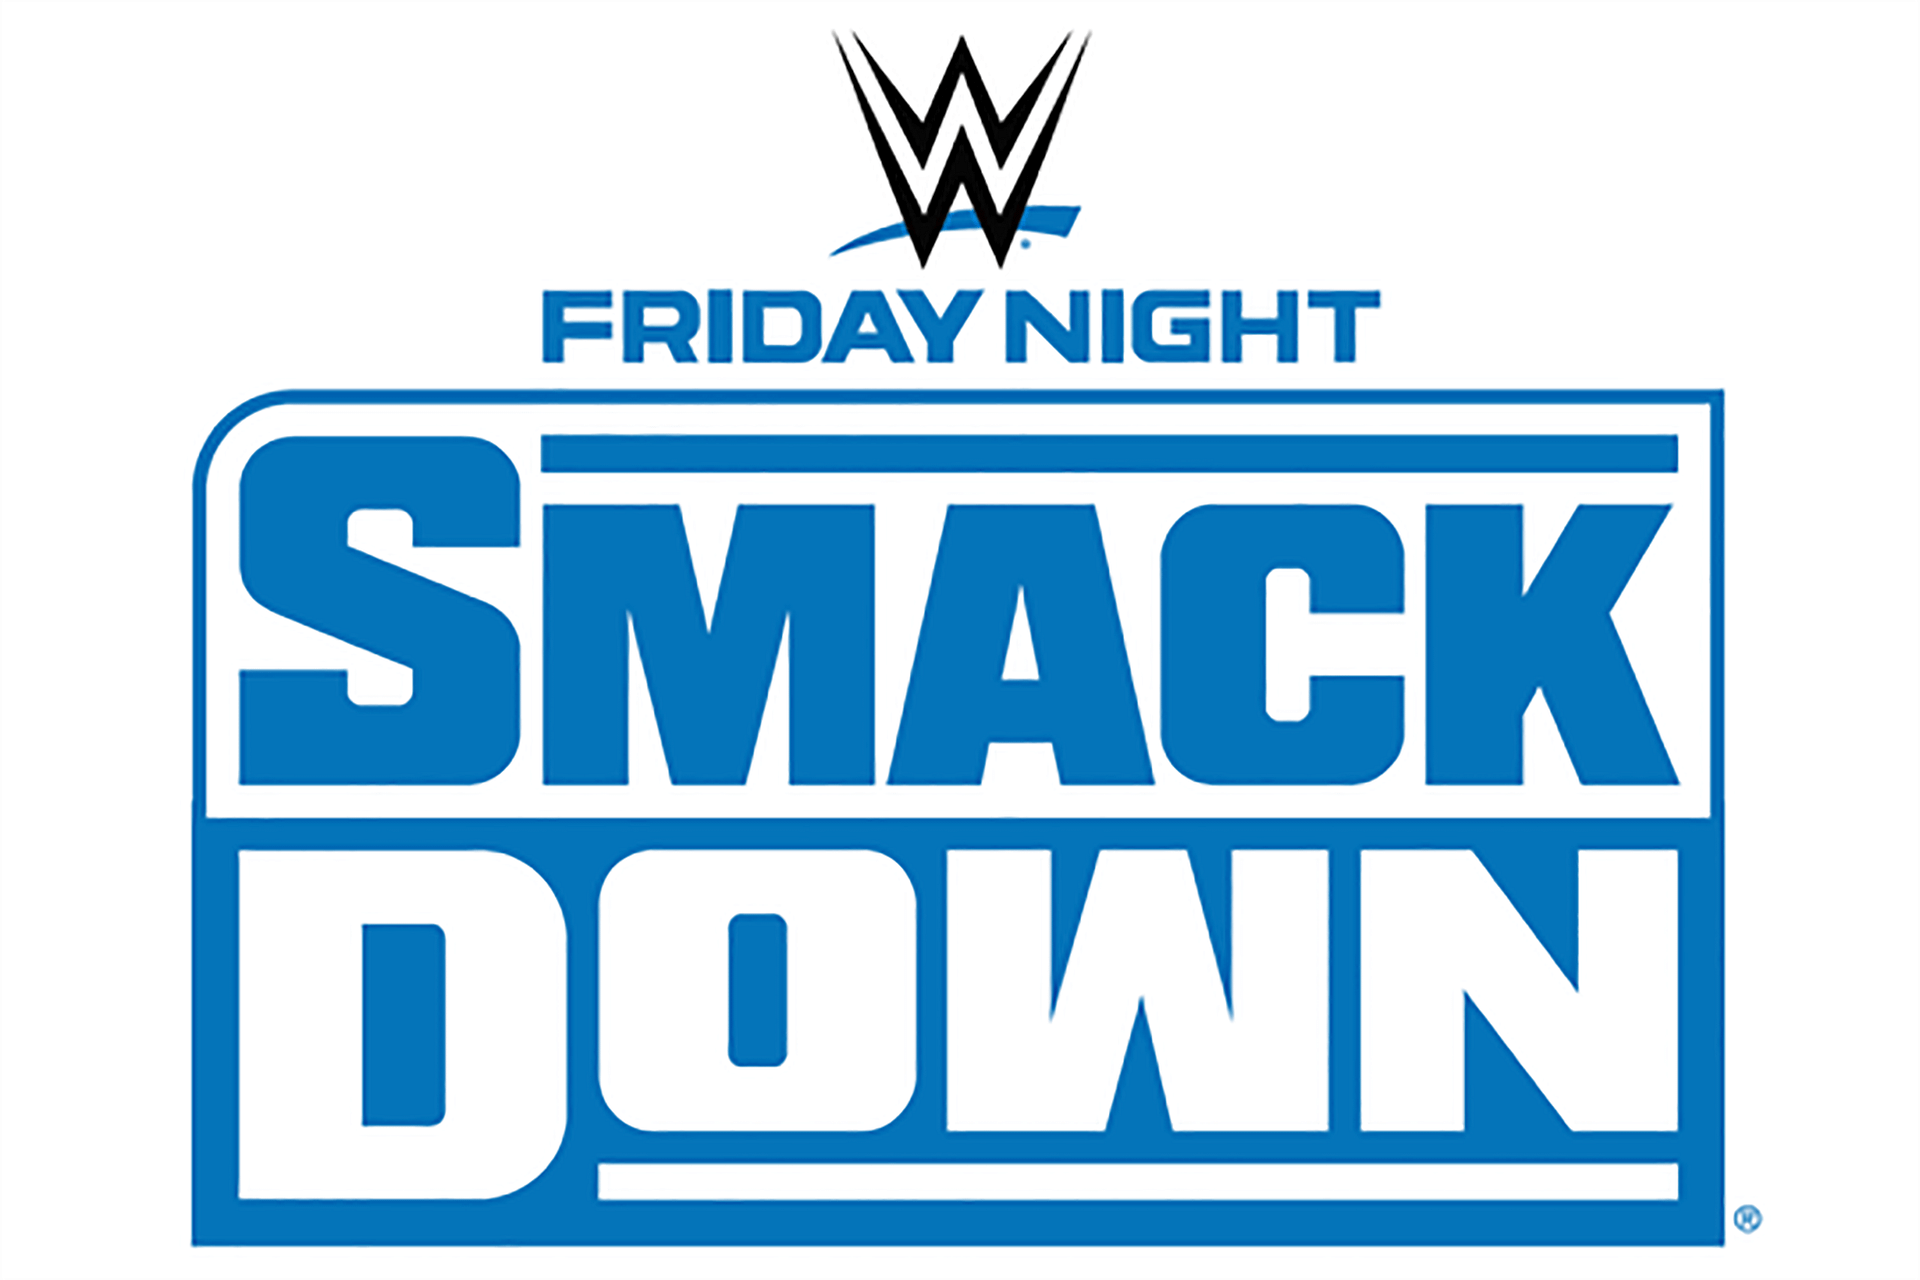 WWE Smackdown Ratings Make Heel Roman Look Strong